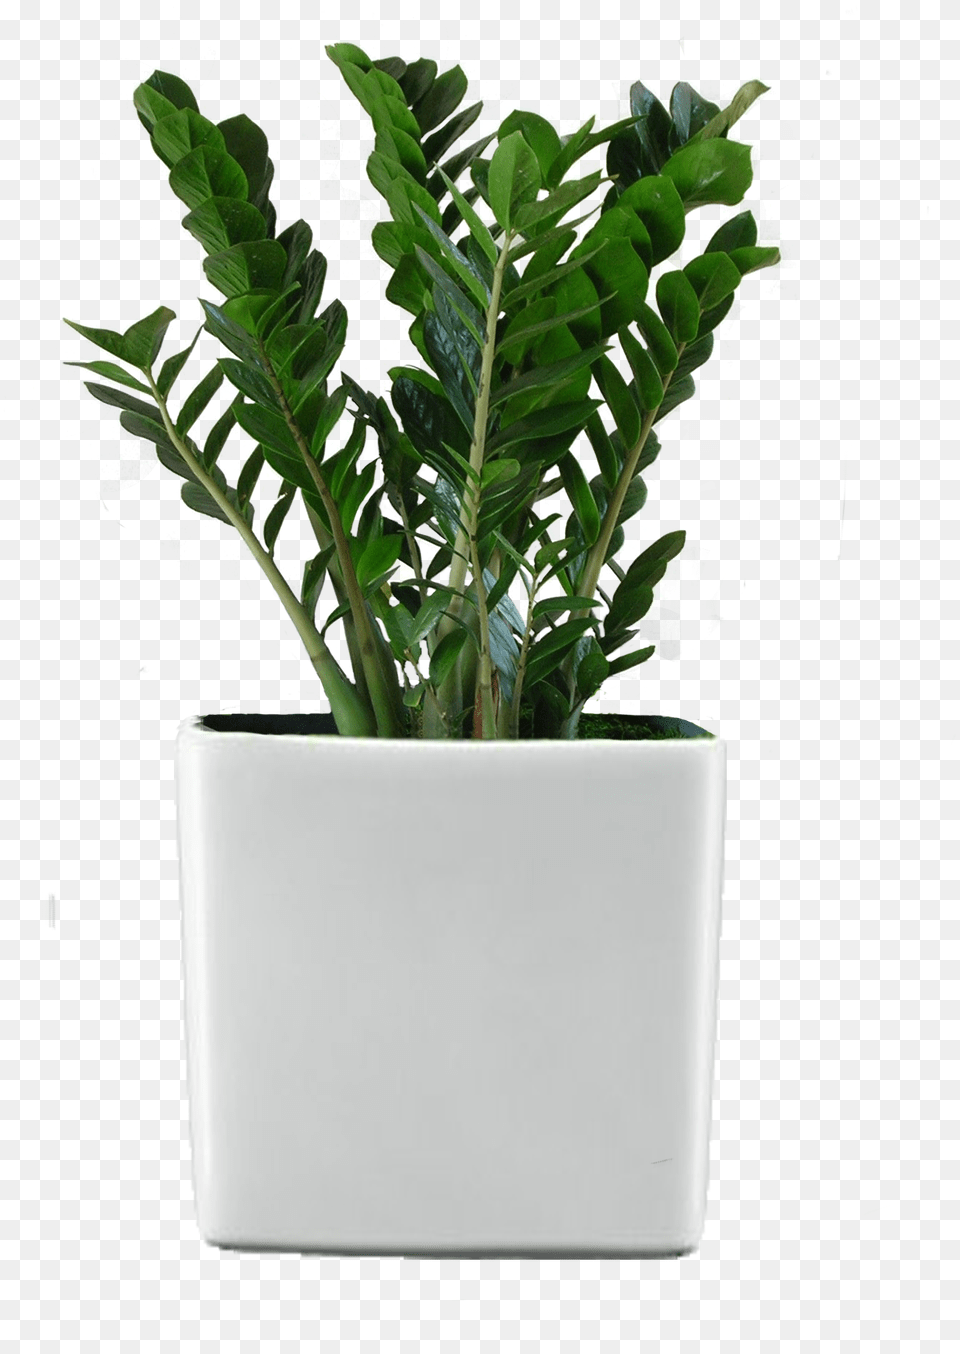 Ficus Retusa Houseplant Flower Garden Potted Plant Flower Potted Plant Transparent Background, Jar, Leaf, Planter, Potted Plant Png Image